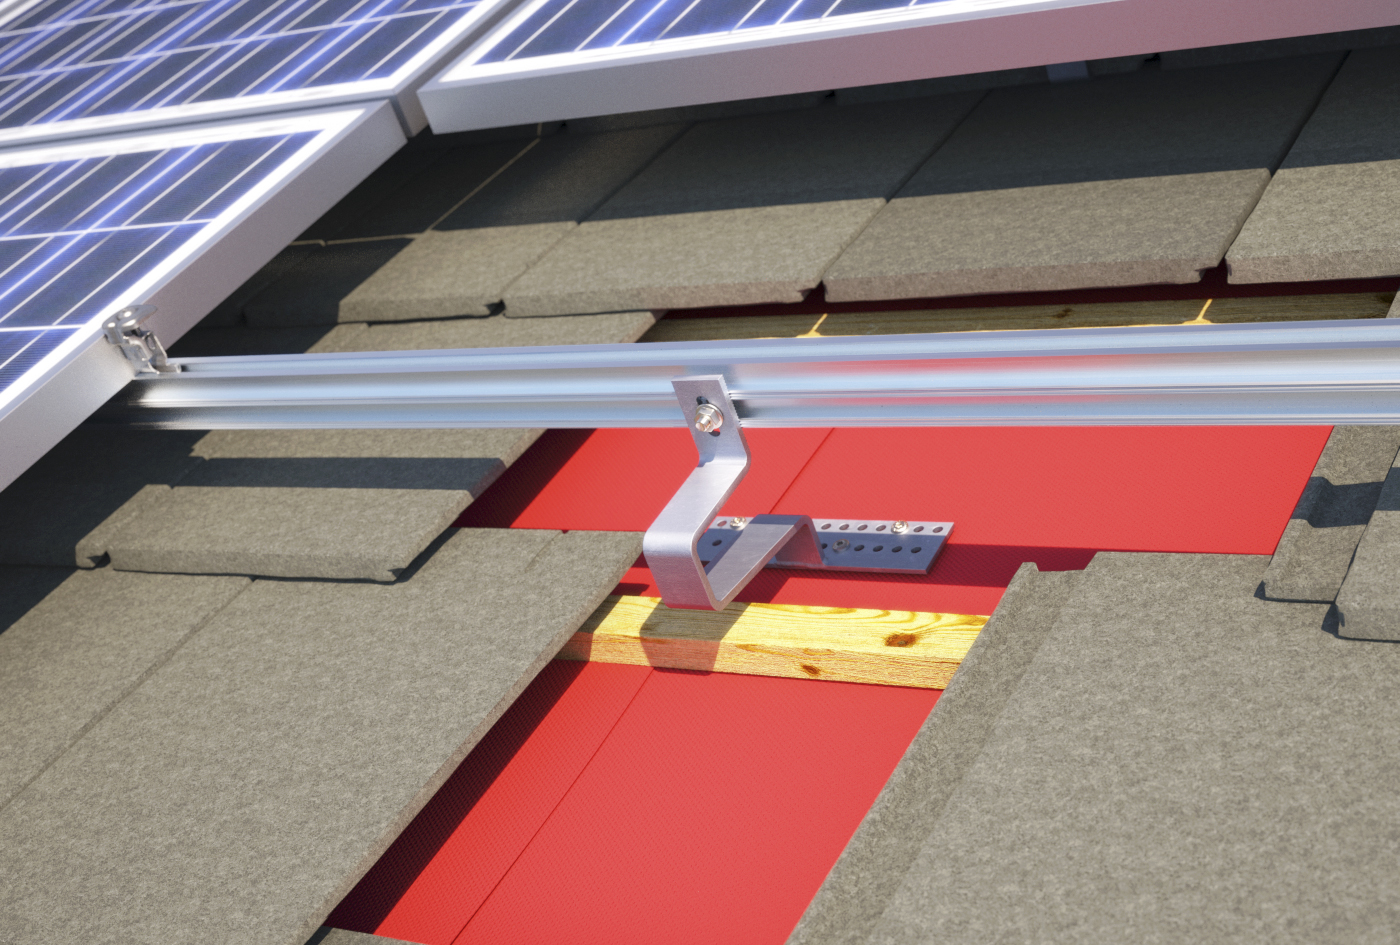 YZ-Solar Tile Roof System